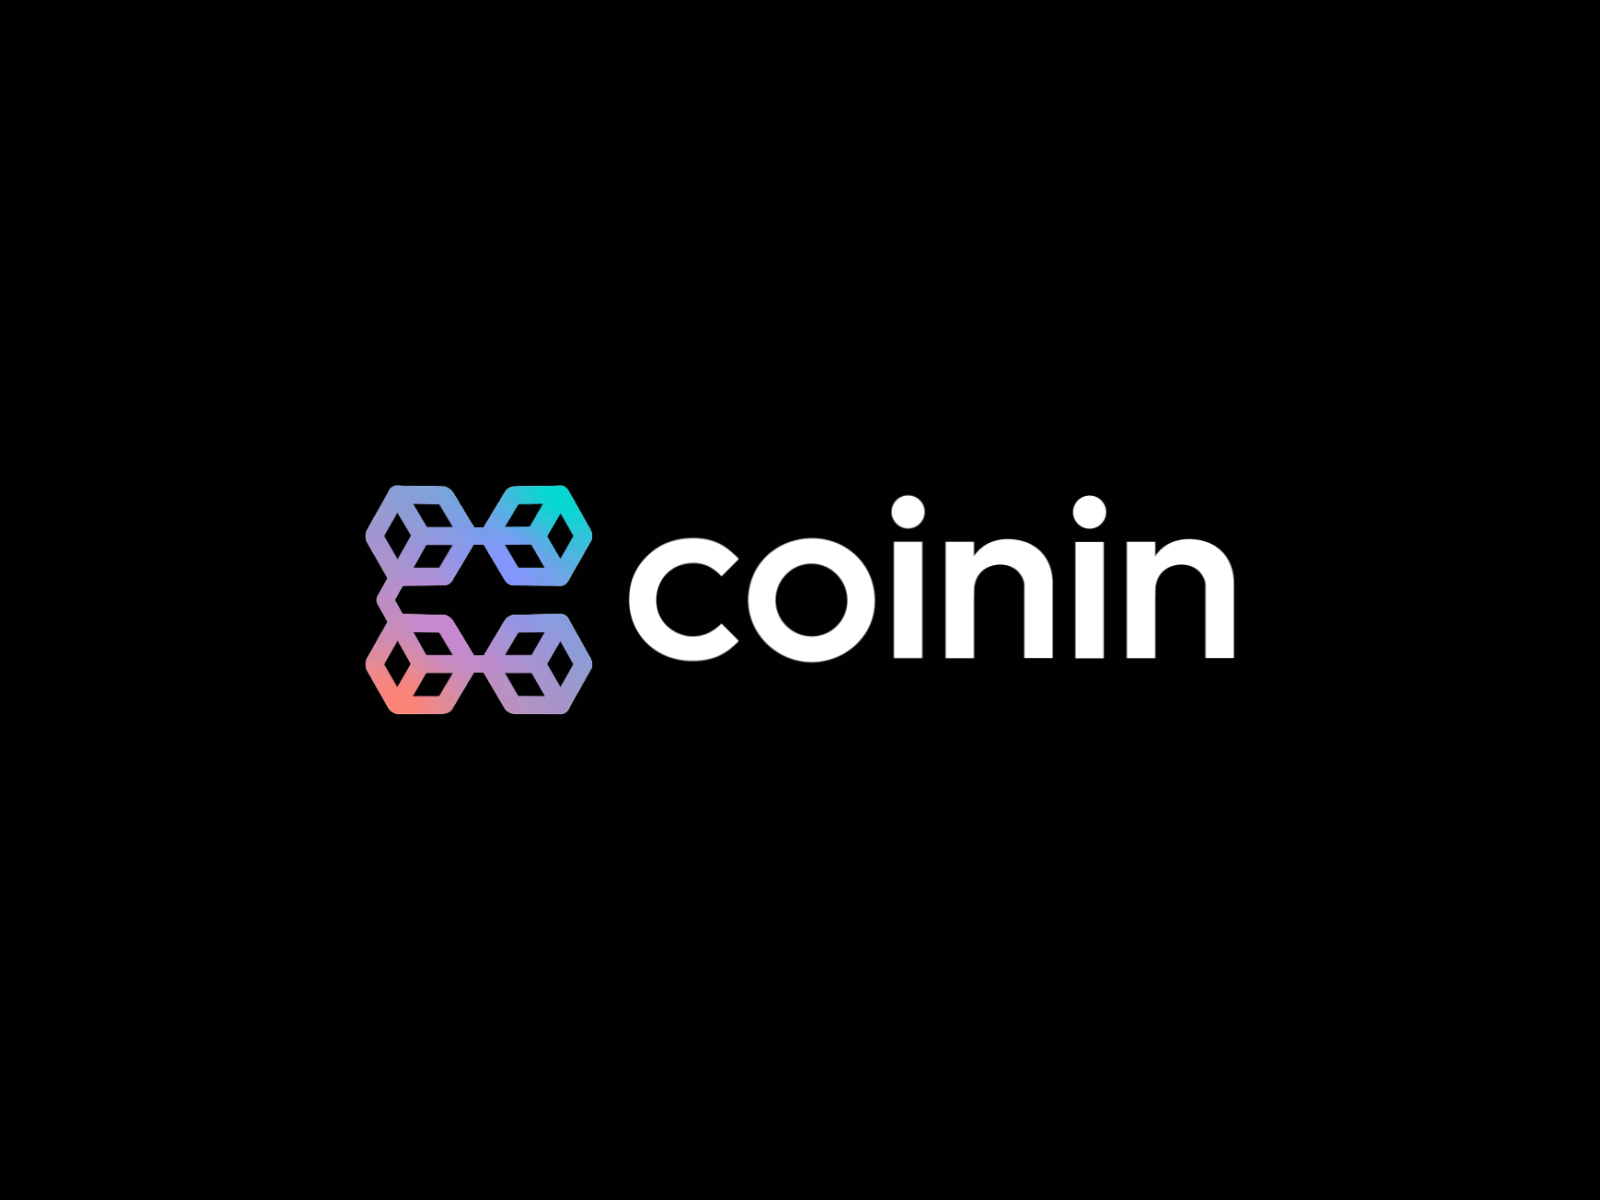 Coinin logo animation